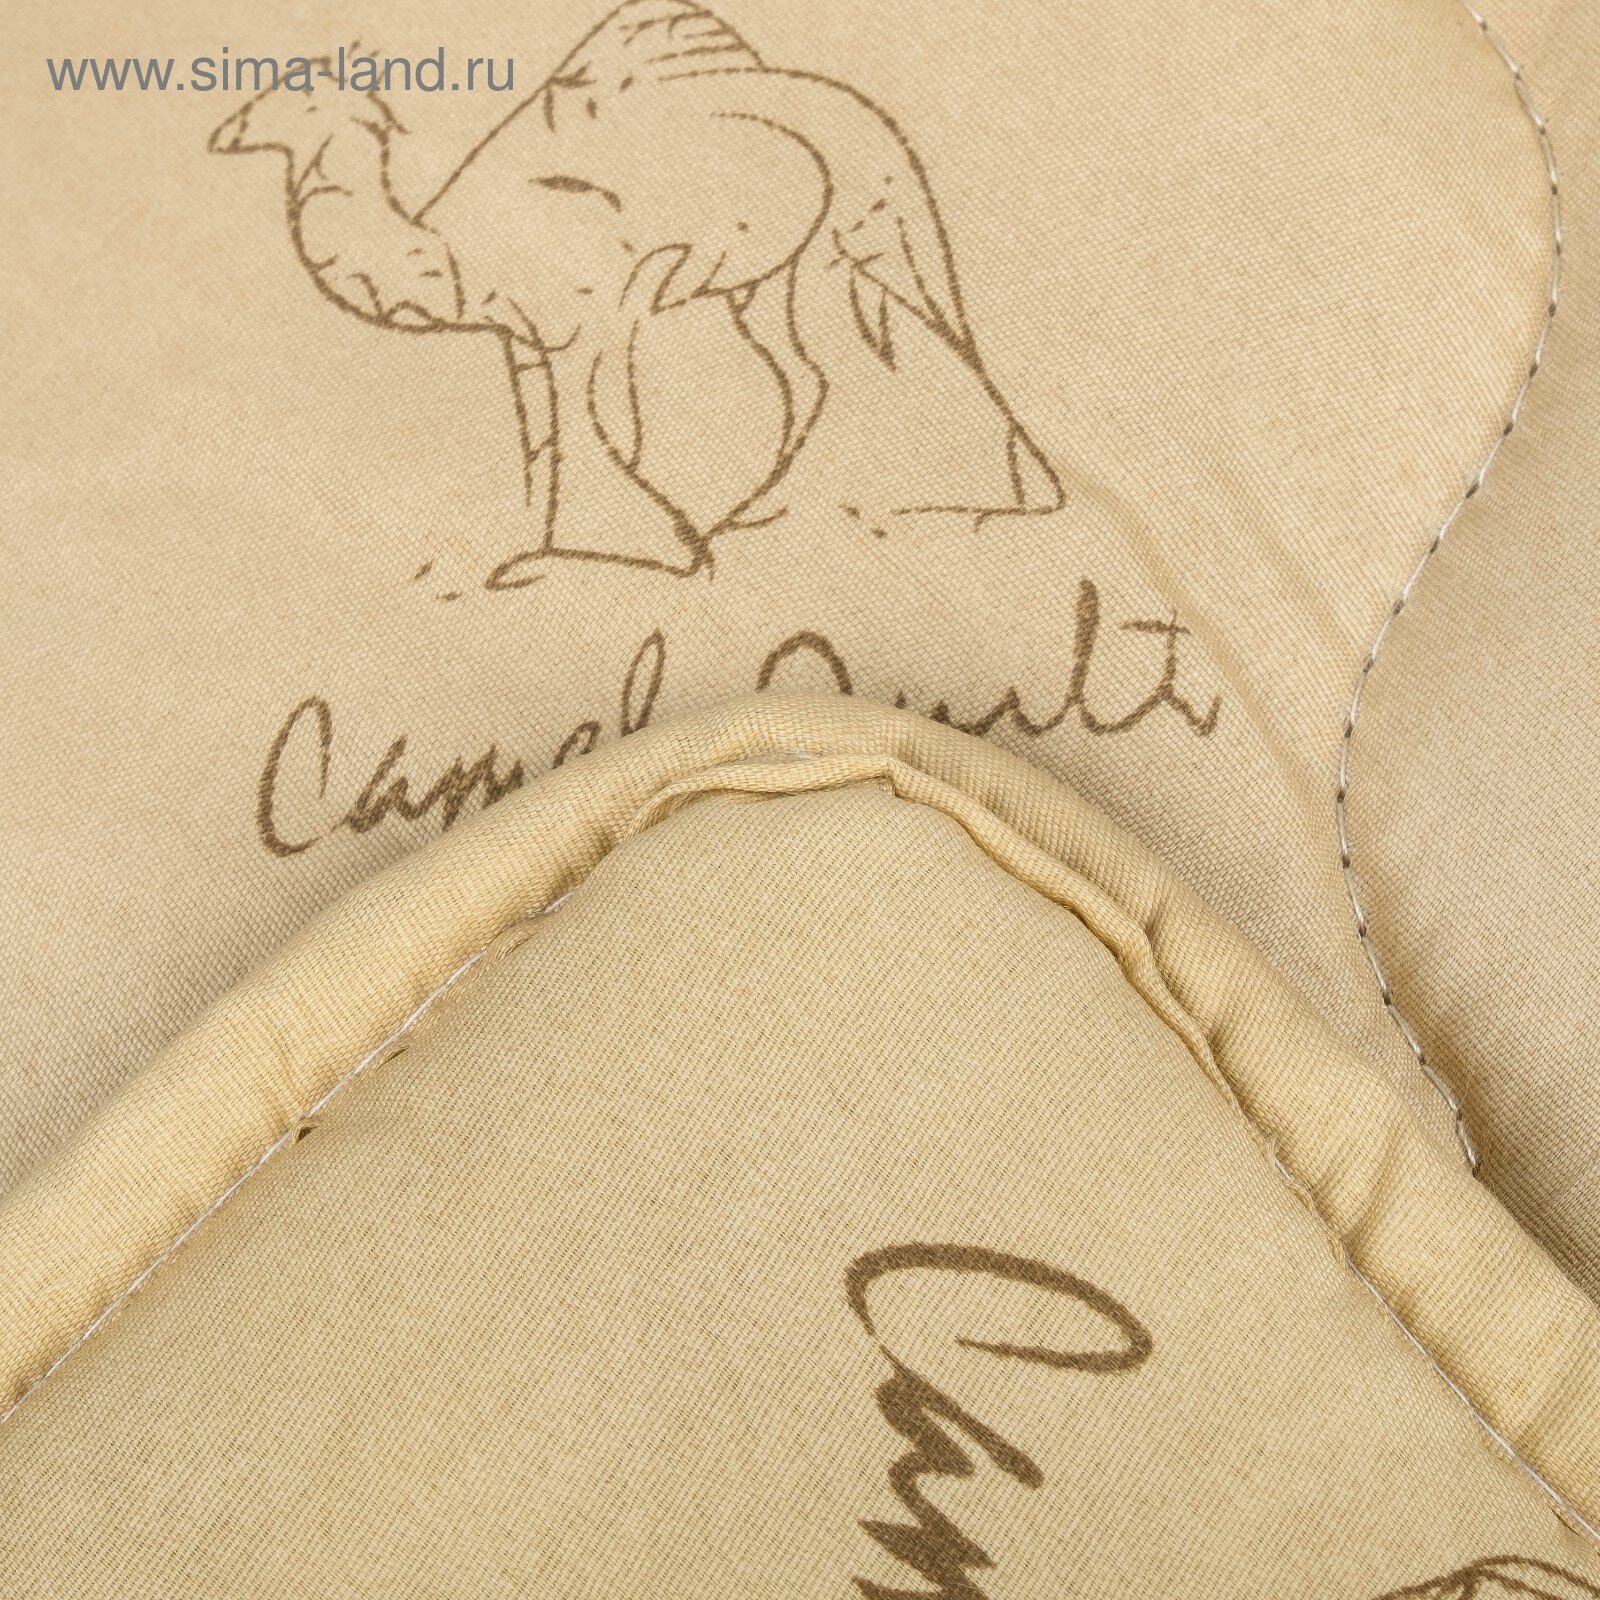 Одеяло «Верблюжья шерсть», размер 172х205 ± 5 см, 300гр/м2, чехол п/э - фотография № 3